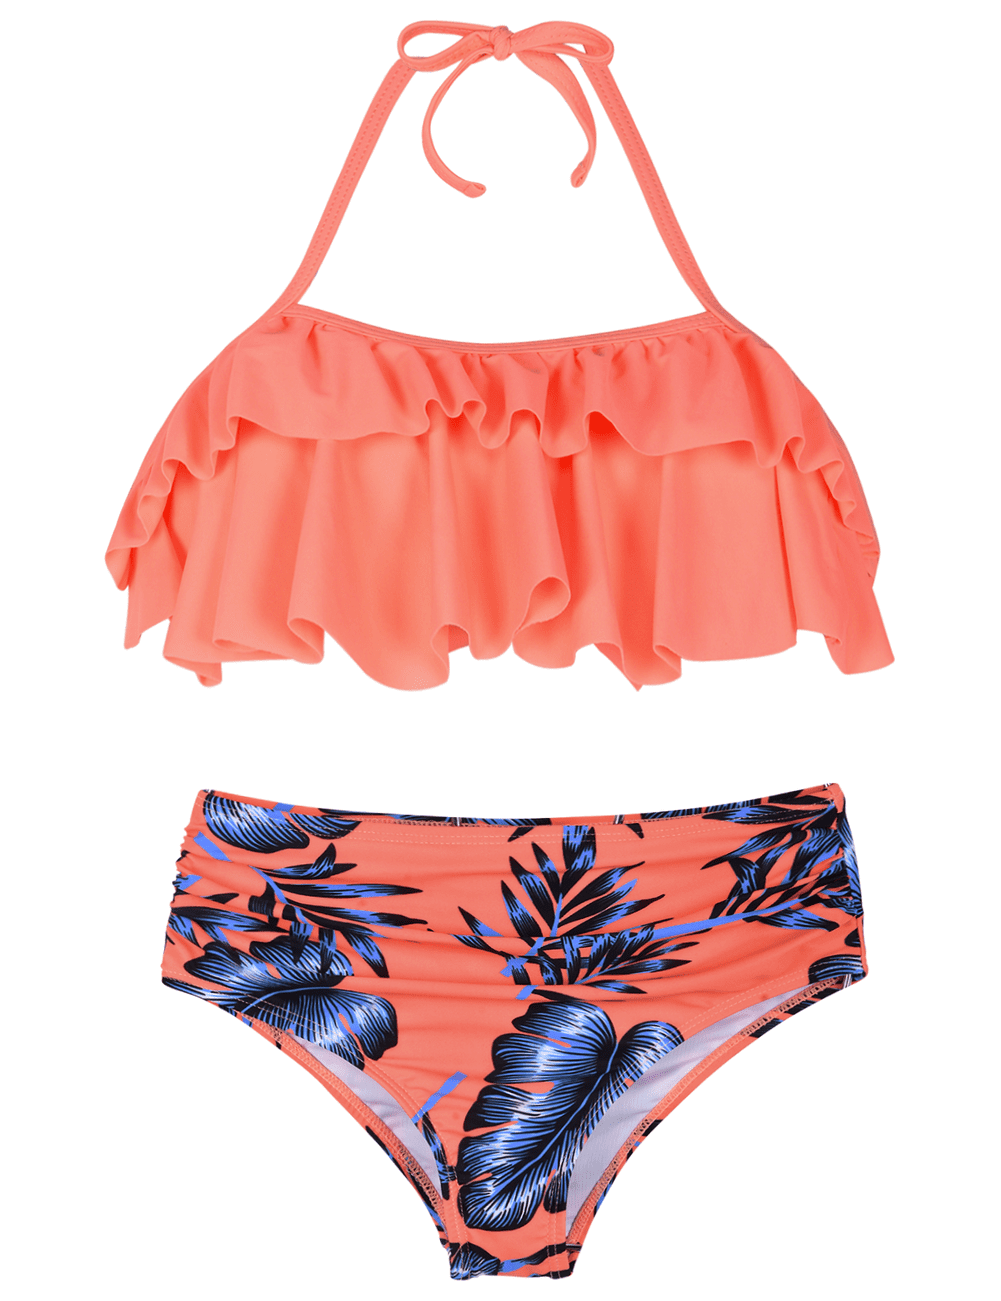 Hilor Girl's Bikini Set Flounce Two Piece Swimsuits Kids Ruffled Bathing Suits Swimwear 